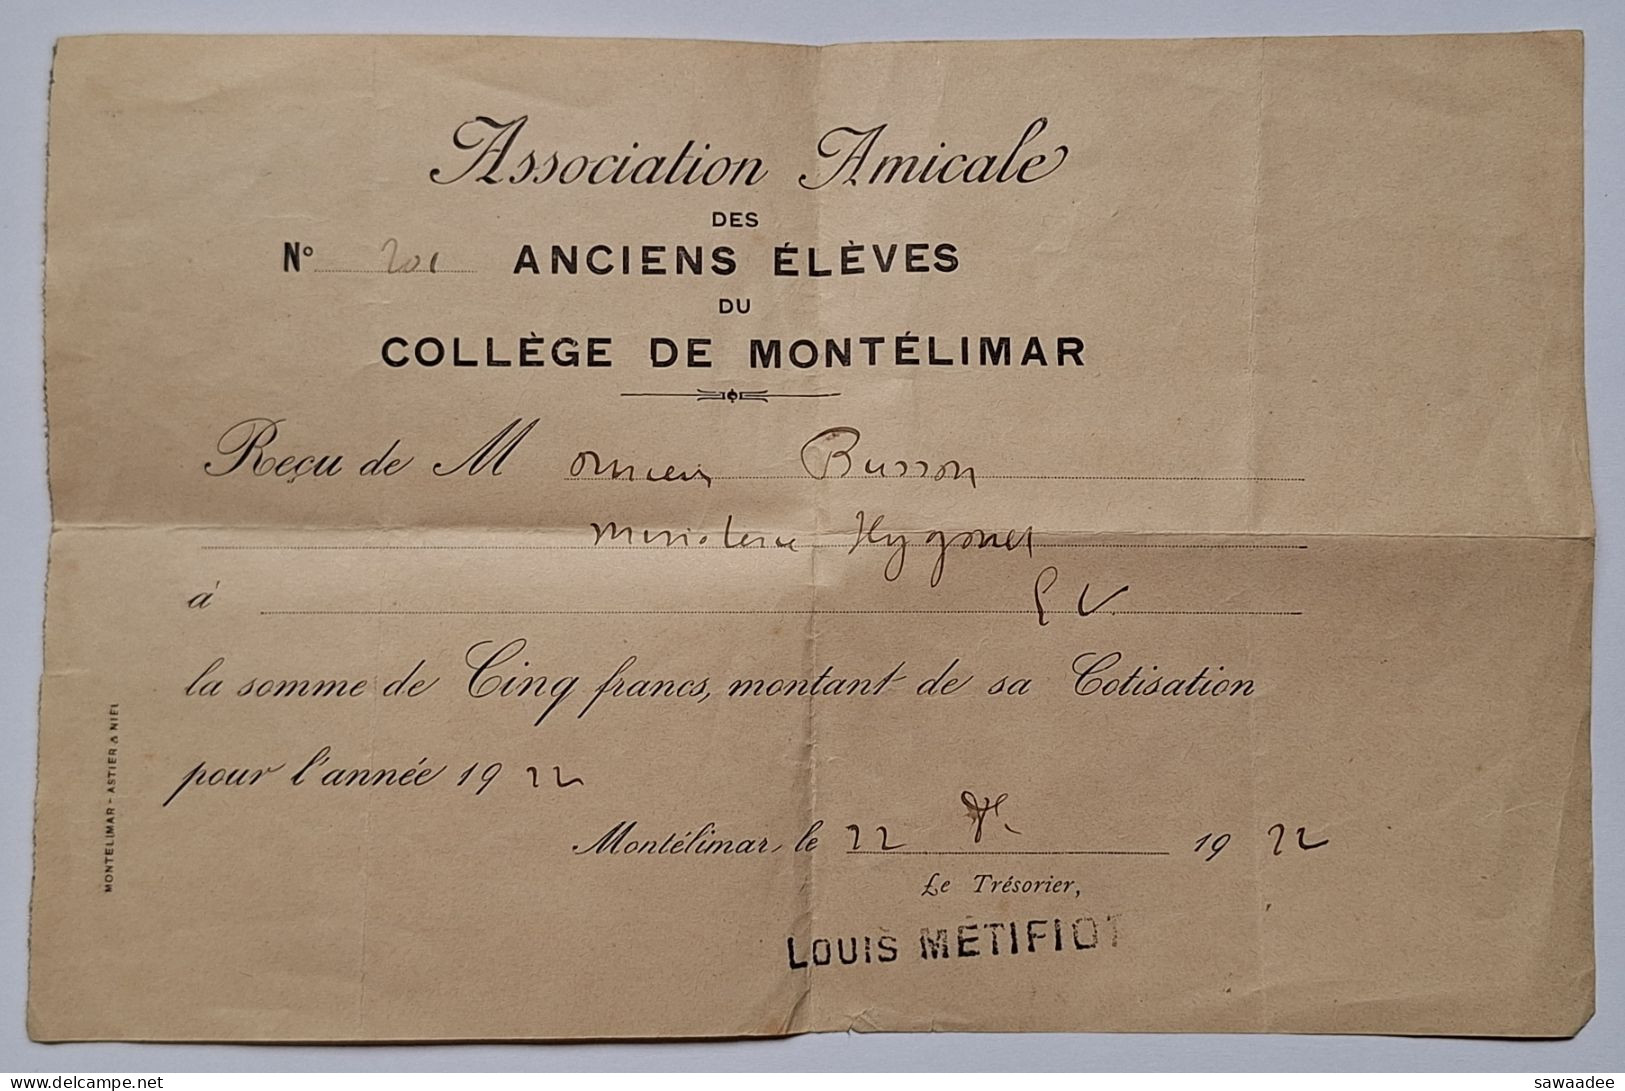 DOCUMENT - ASSOCIATION AMICALE DES ANCIENS ELEVES DU COLLEGE DE MONTELIMAR - COTISATION 1924 - Diplomas Y Calificaciones Escolares